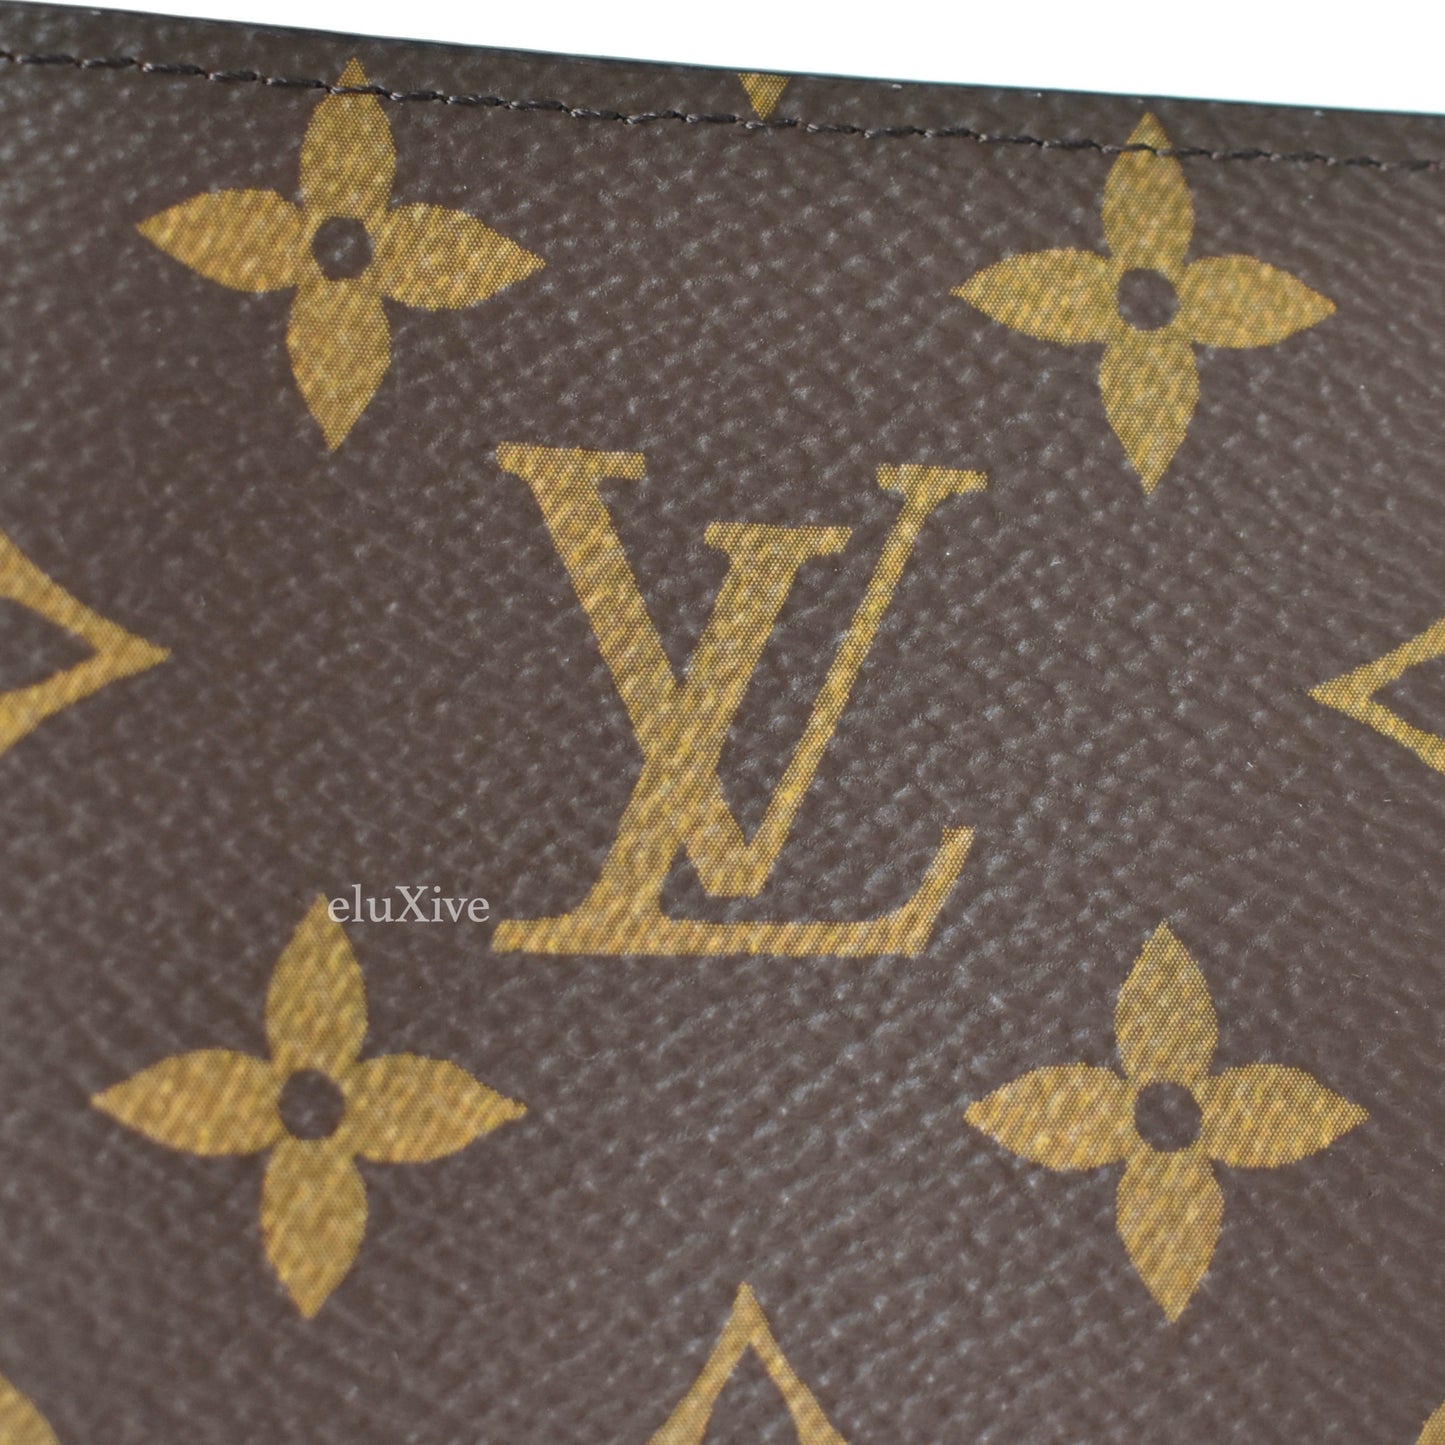 Louis Vuitton - VIP Gift Monogram Passport Holder Wallet (Bordeaux)